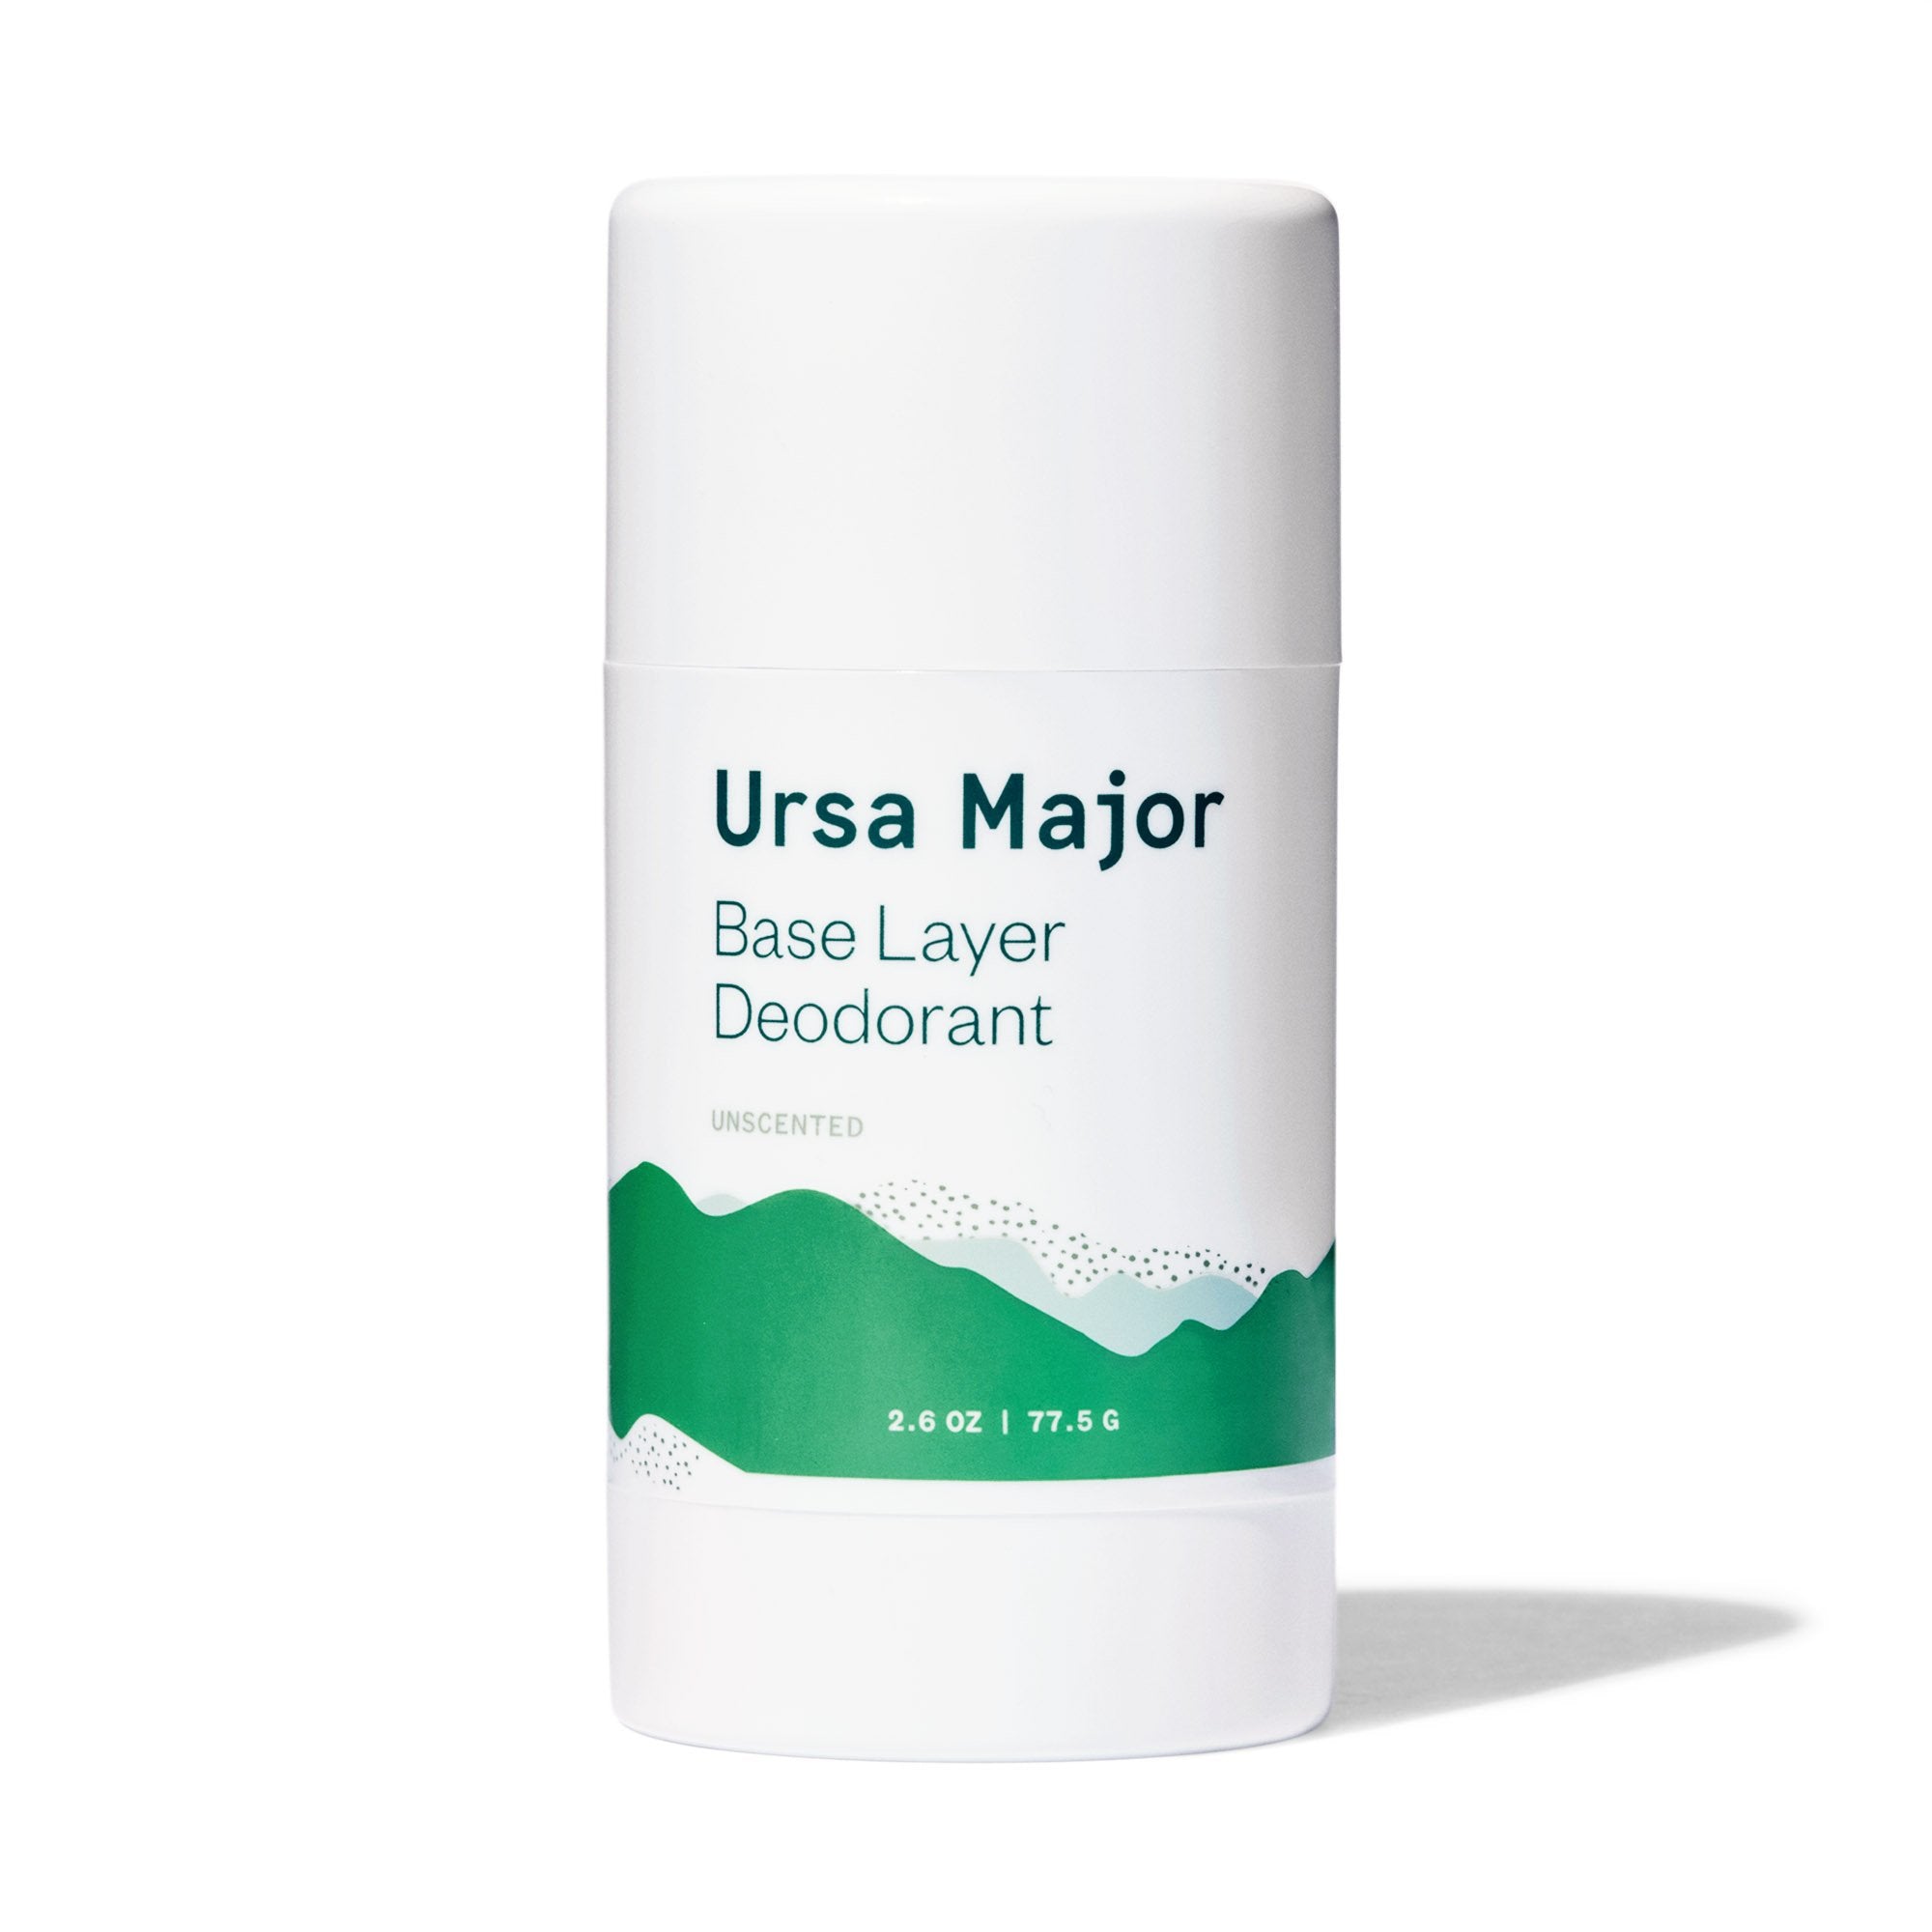 Ursa Major Base Layer Deodorant